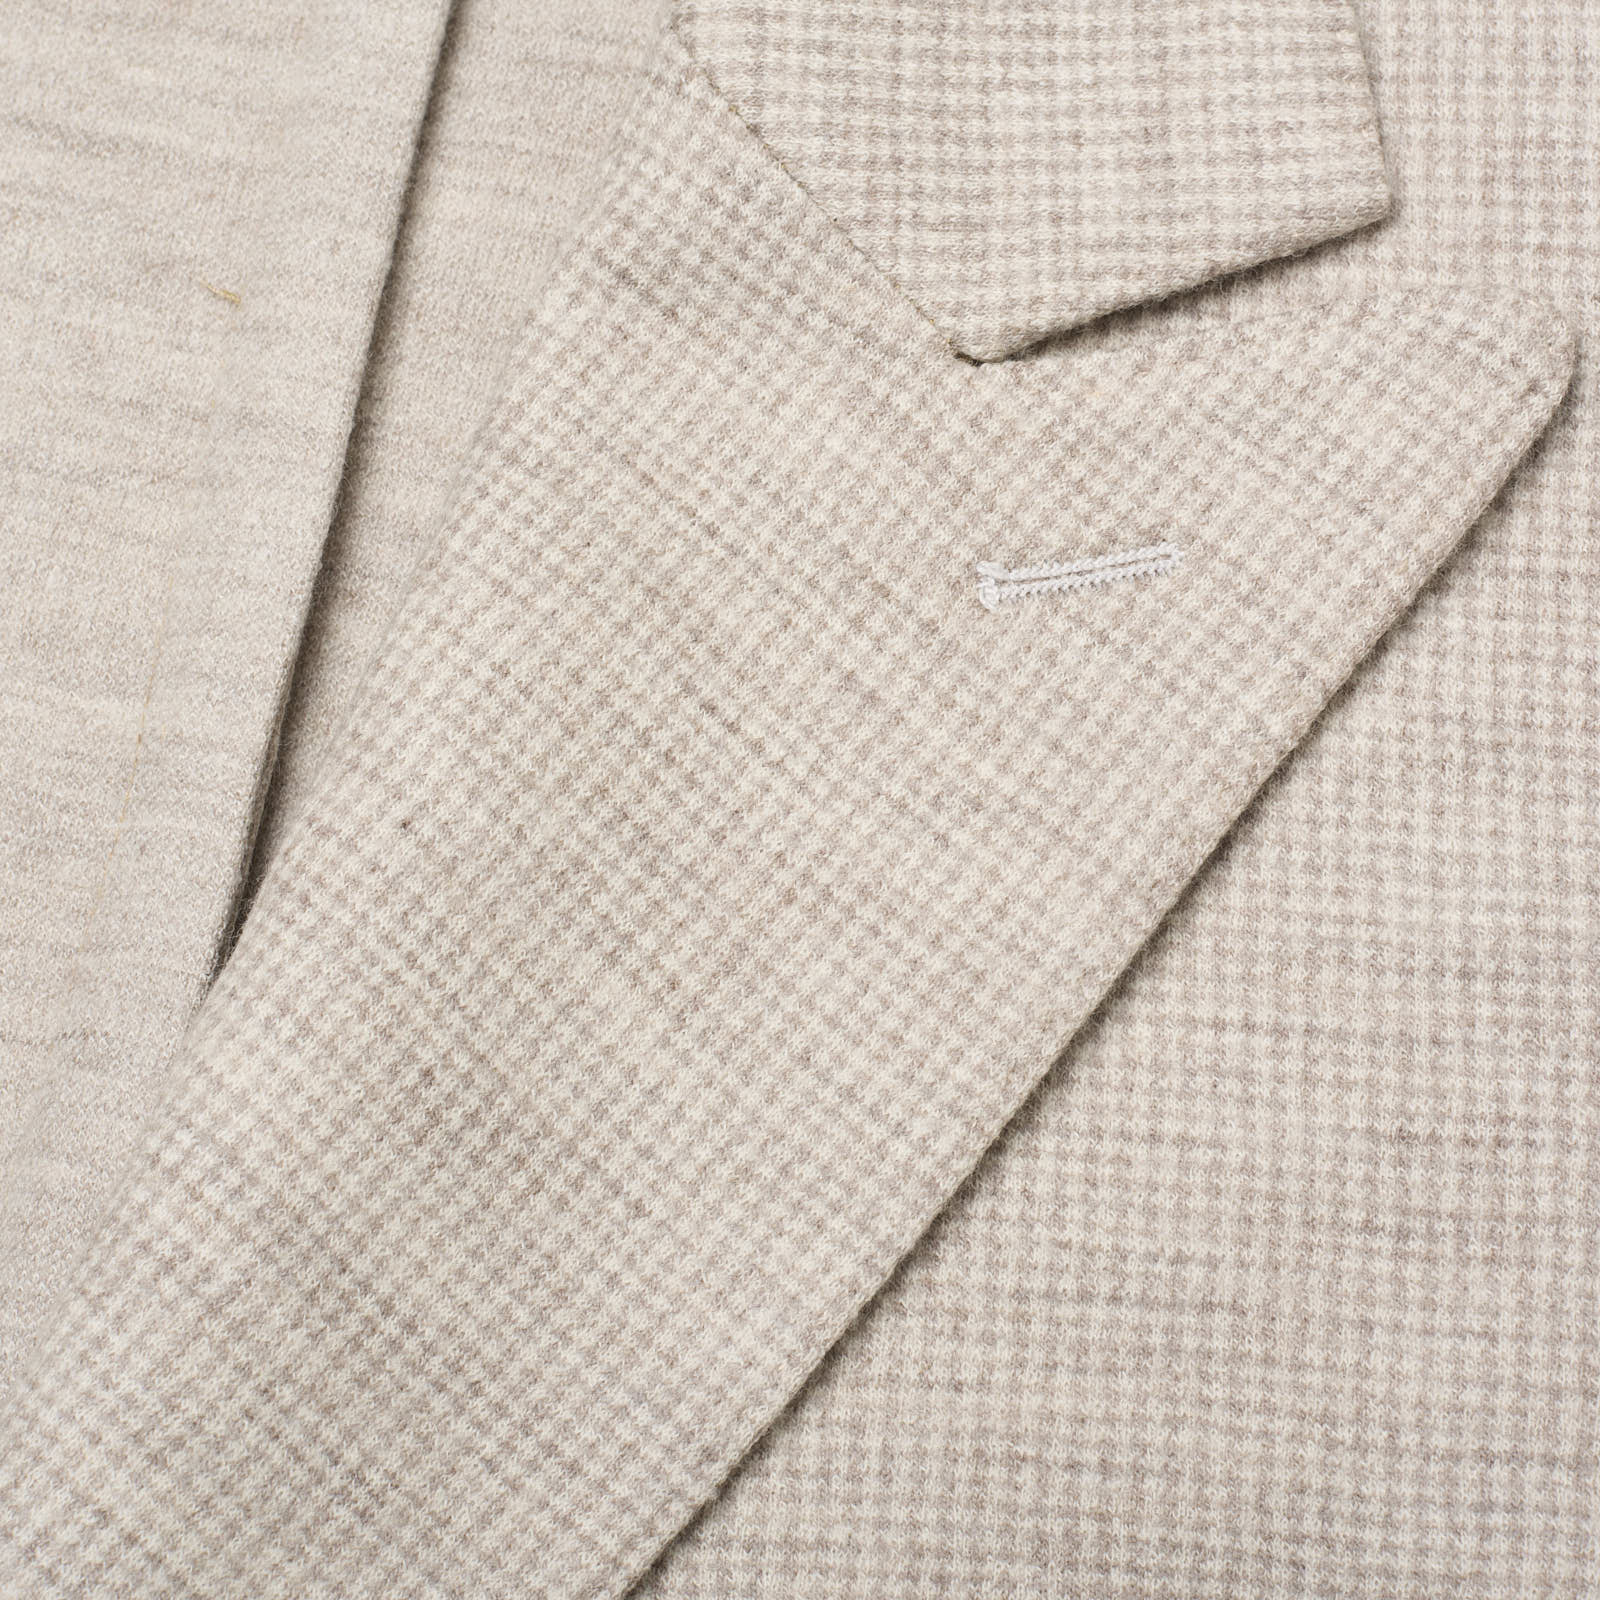 SARTORIA PARTENOPEA Beige Flannel Peak Lapel Wool Suit NEW Current Model